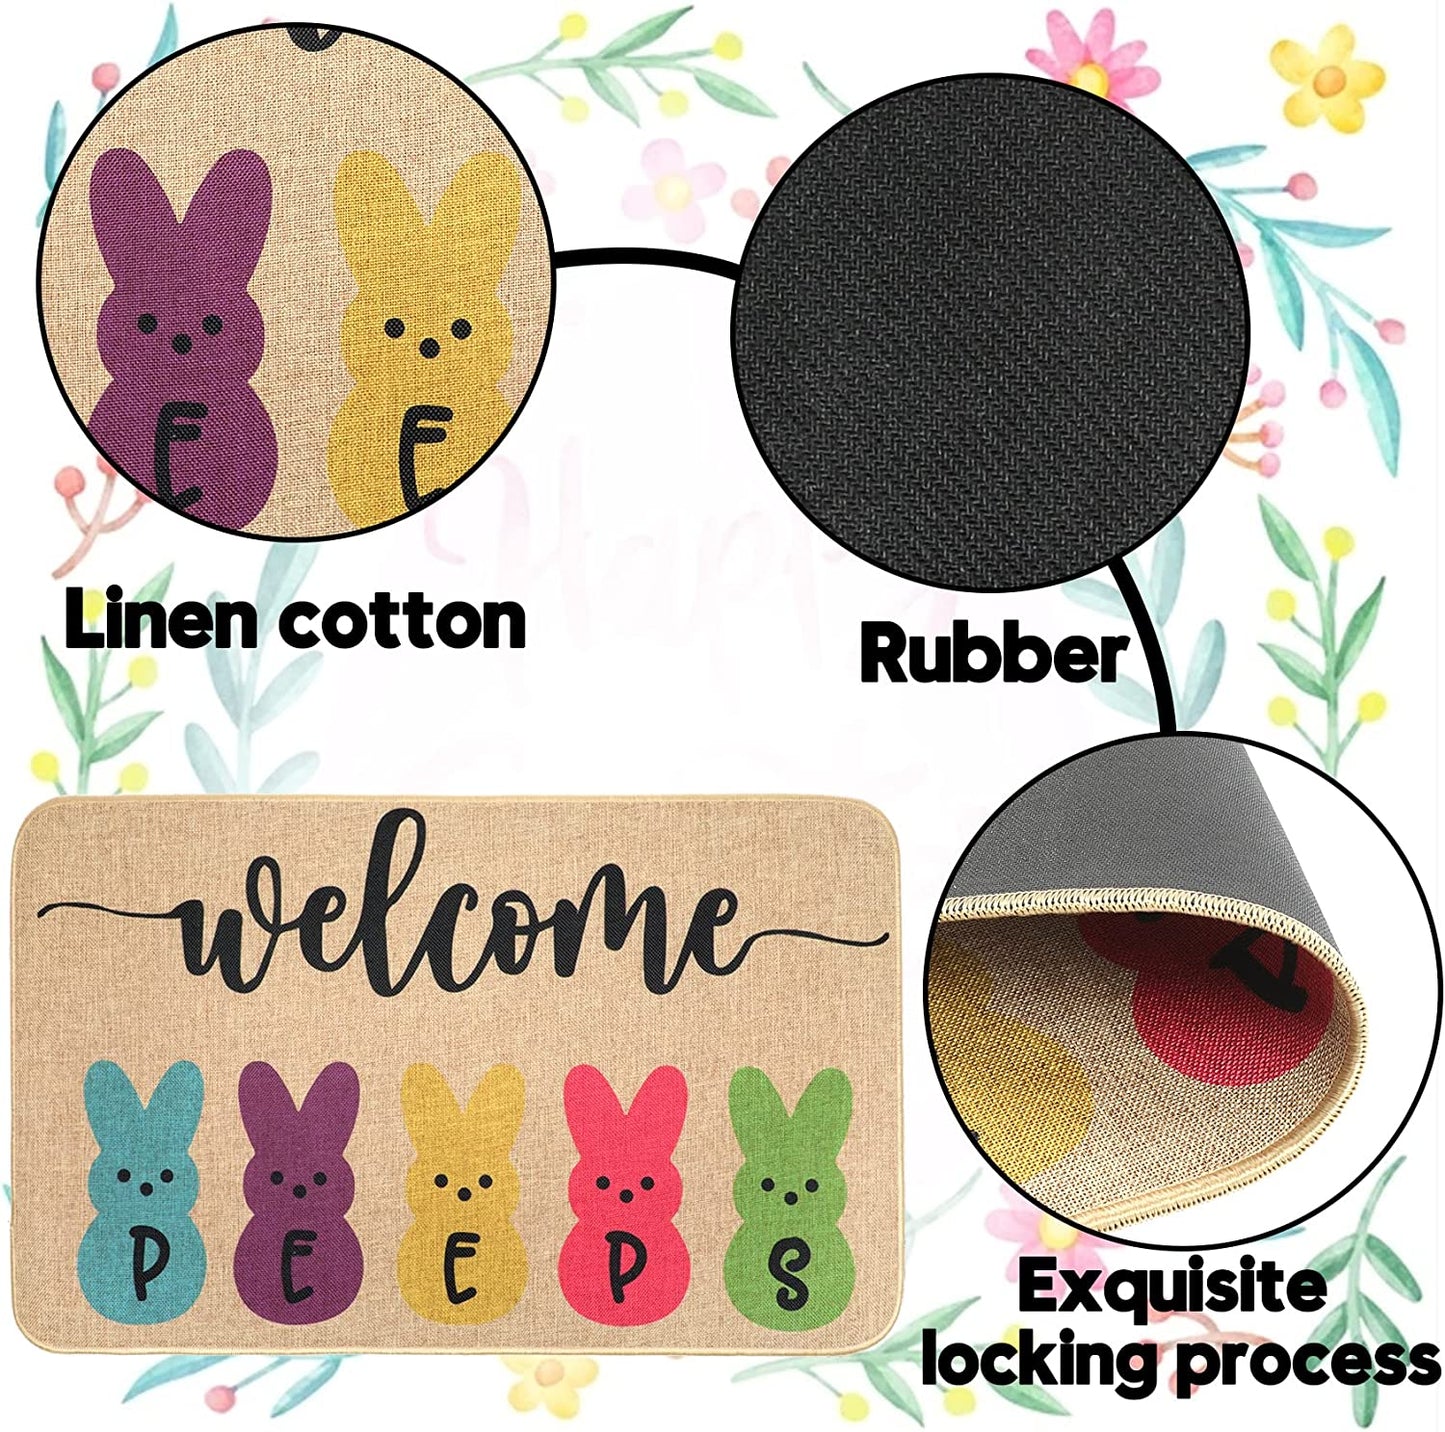 Welcome Peeps Easter Rabbits Elegant Decorative Doormat, Seasonal Spring Easter Holiday Low-Profile Floor Mat Switch Mat for Indoor Outdoor